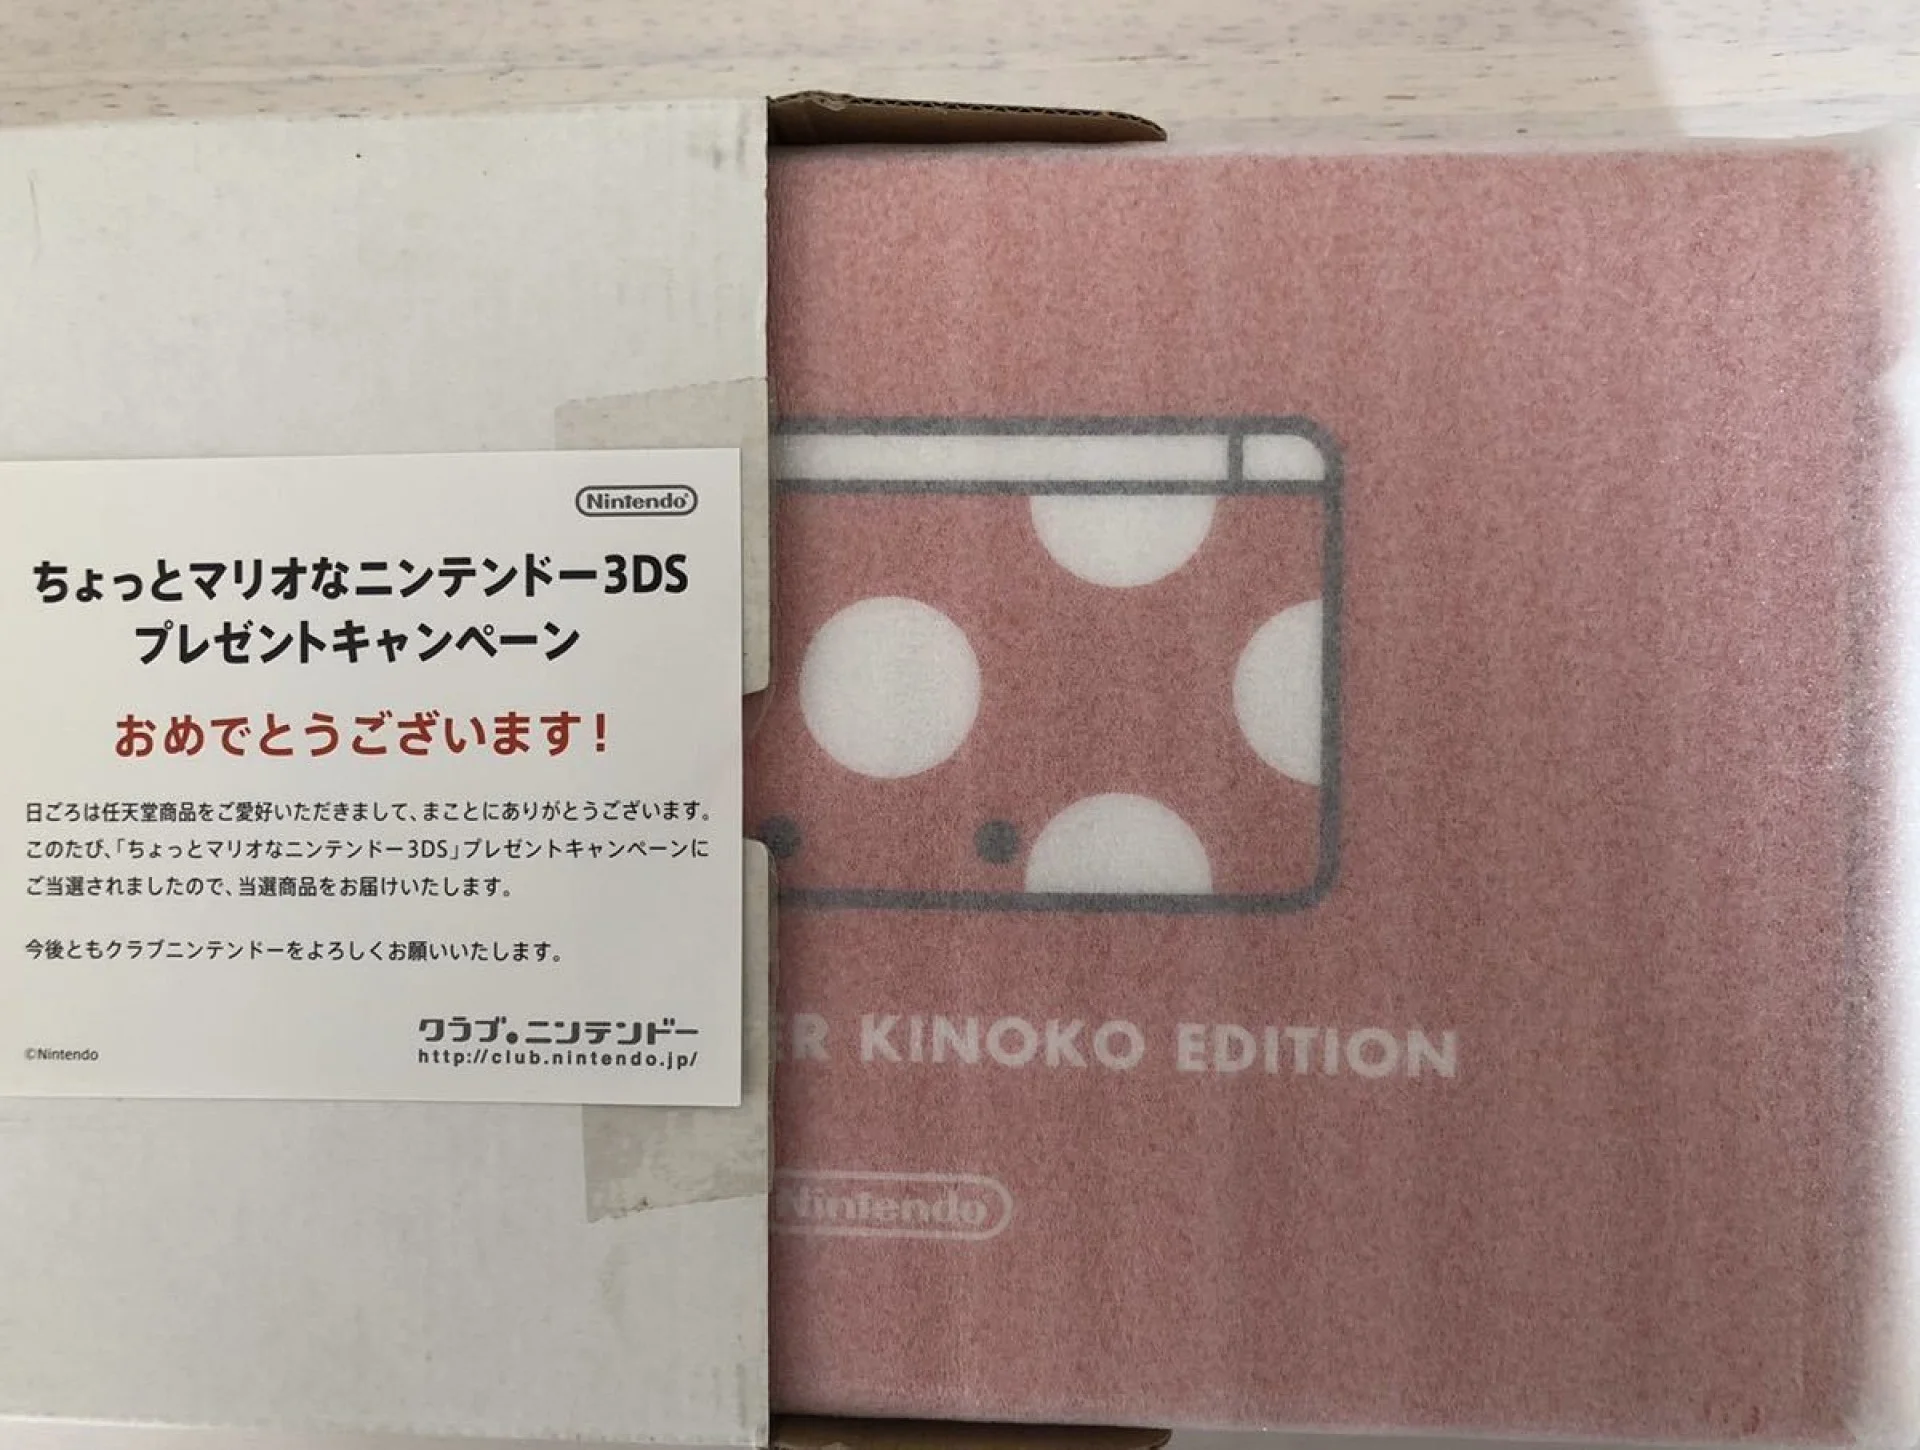 Nintendo 3DS Club Nintendo Chotto Super Kinoko Console [JP